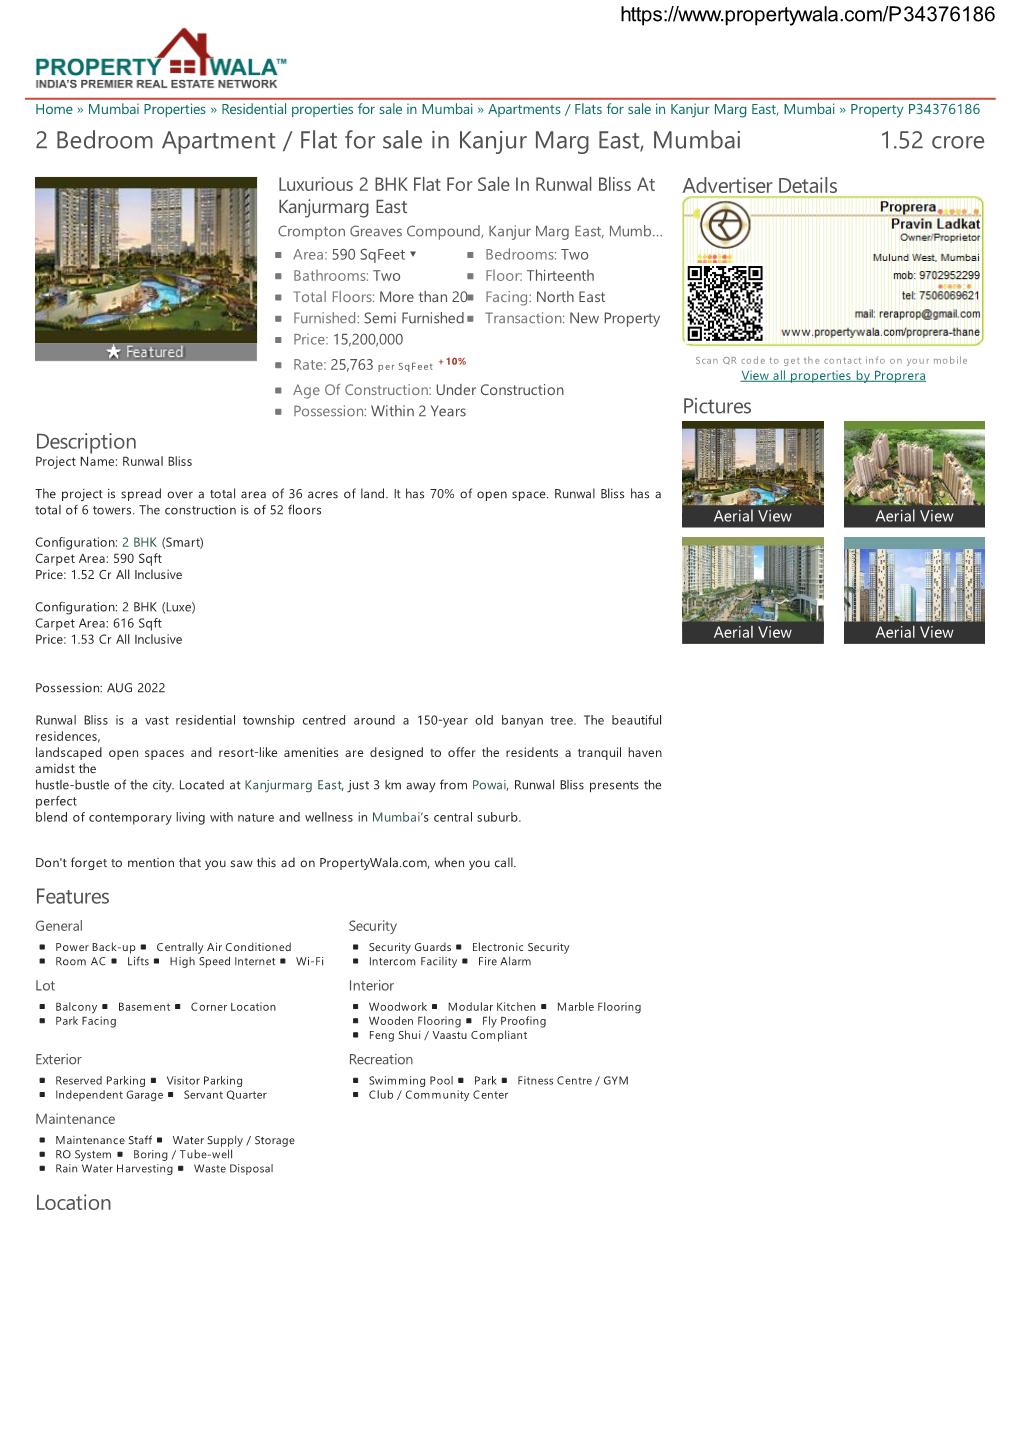 2 Bedroom Apartment / Flat for Sale in Kanjur Marg East, Mumbai (P34376186)